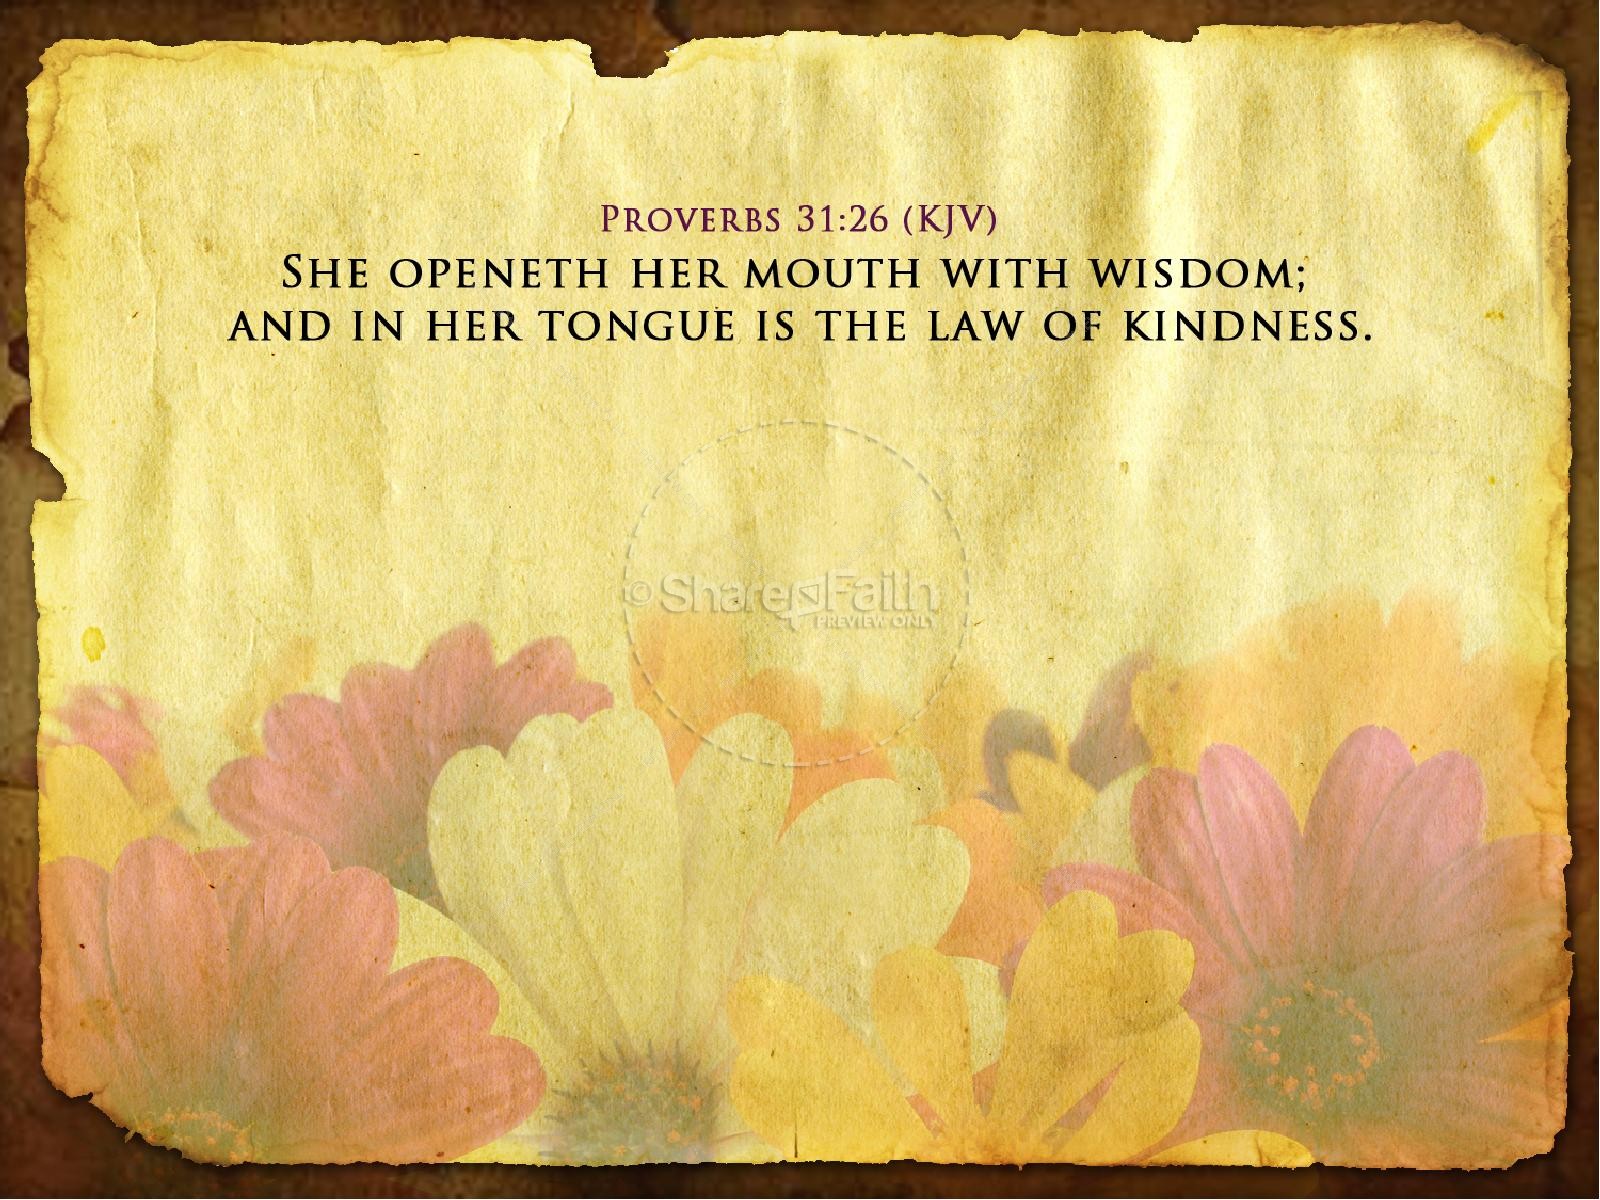 Women of Wisdom Church PowerPoint